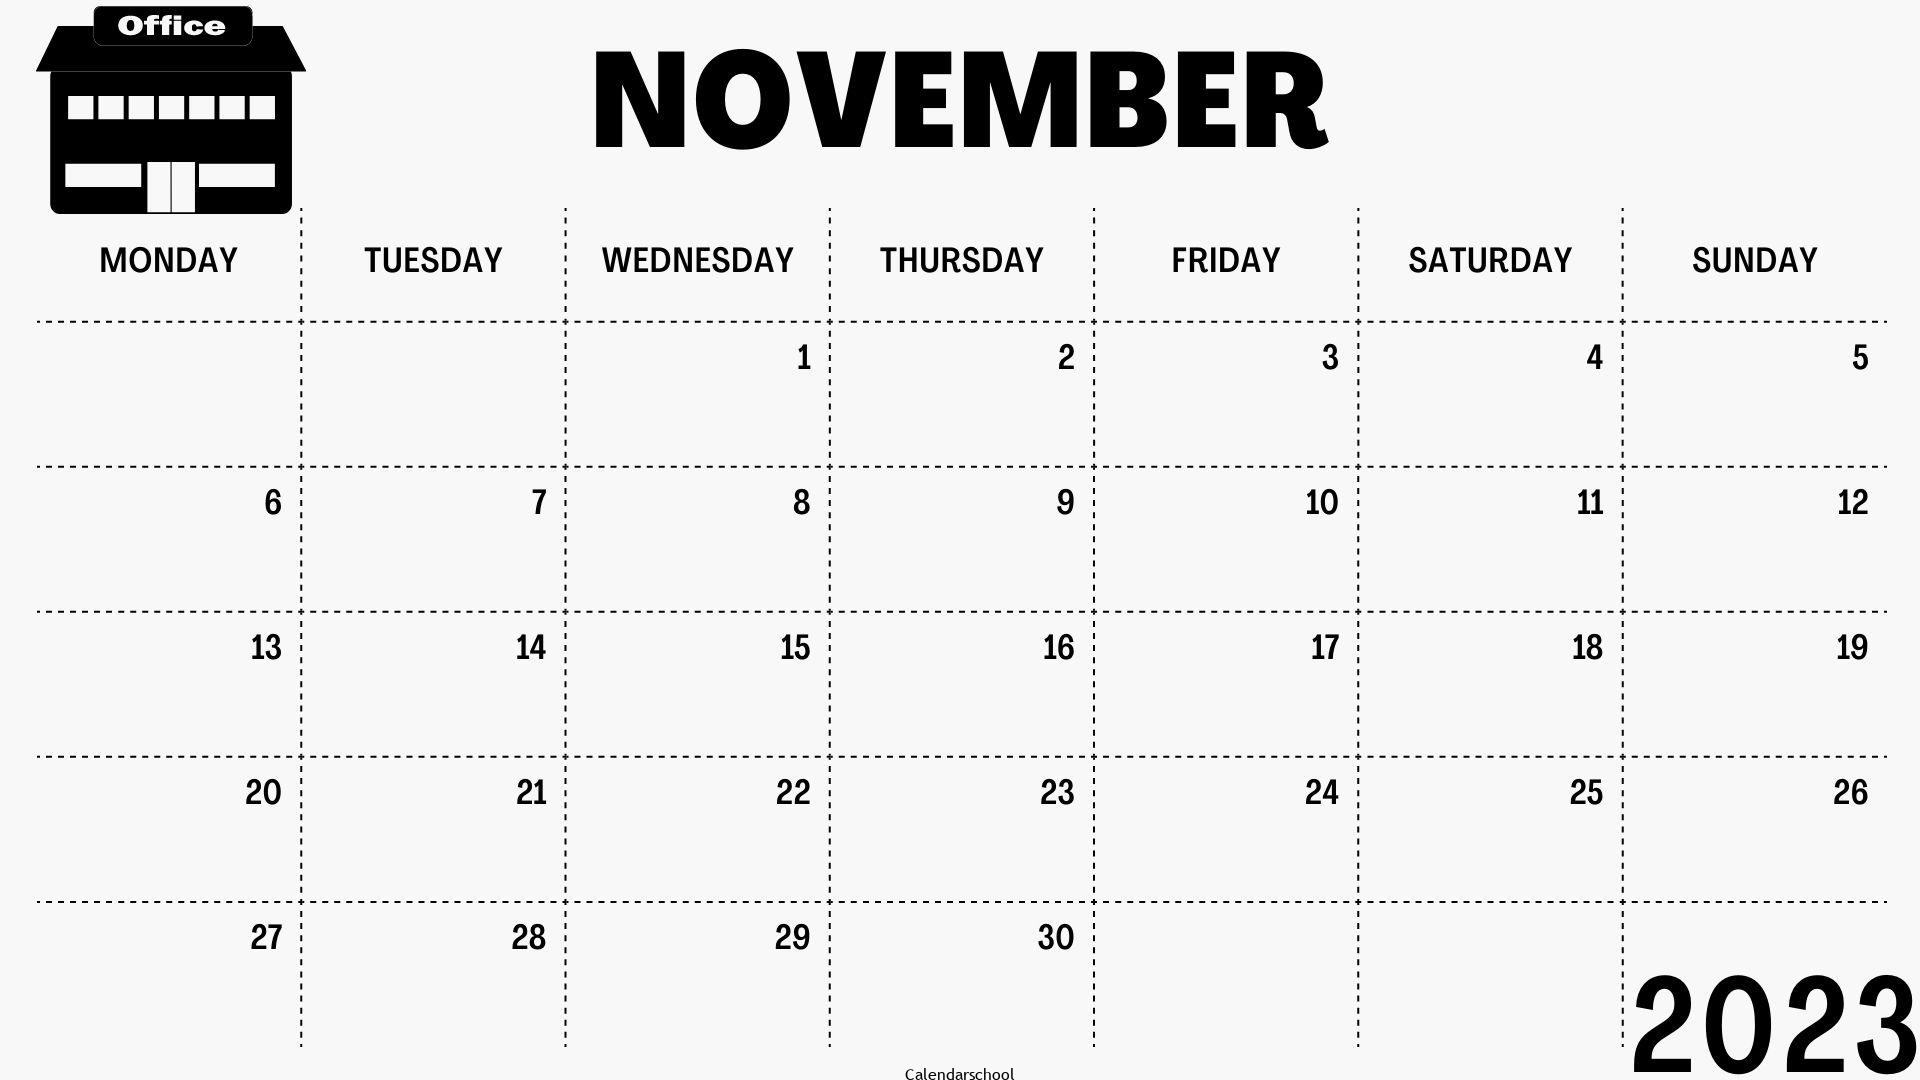 November 2023 Blank Weekly Calendar